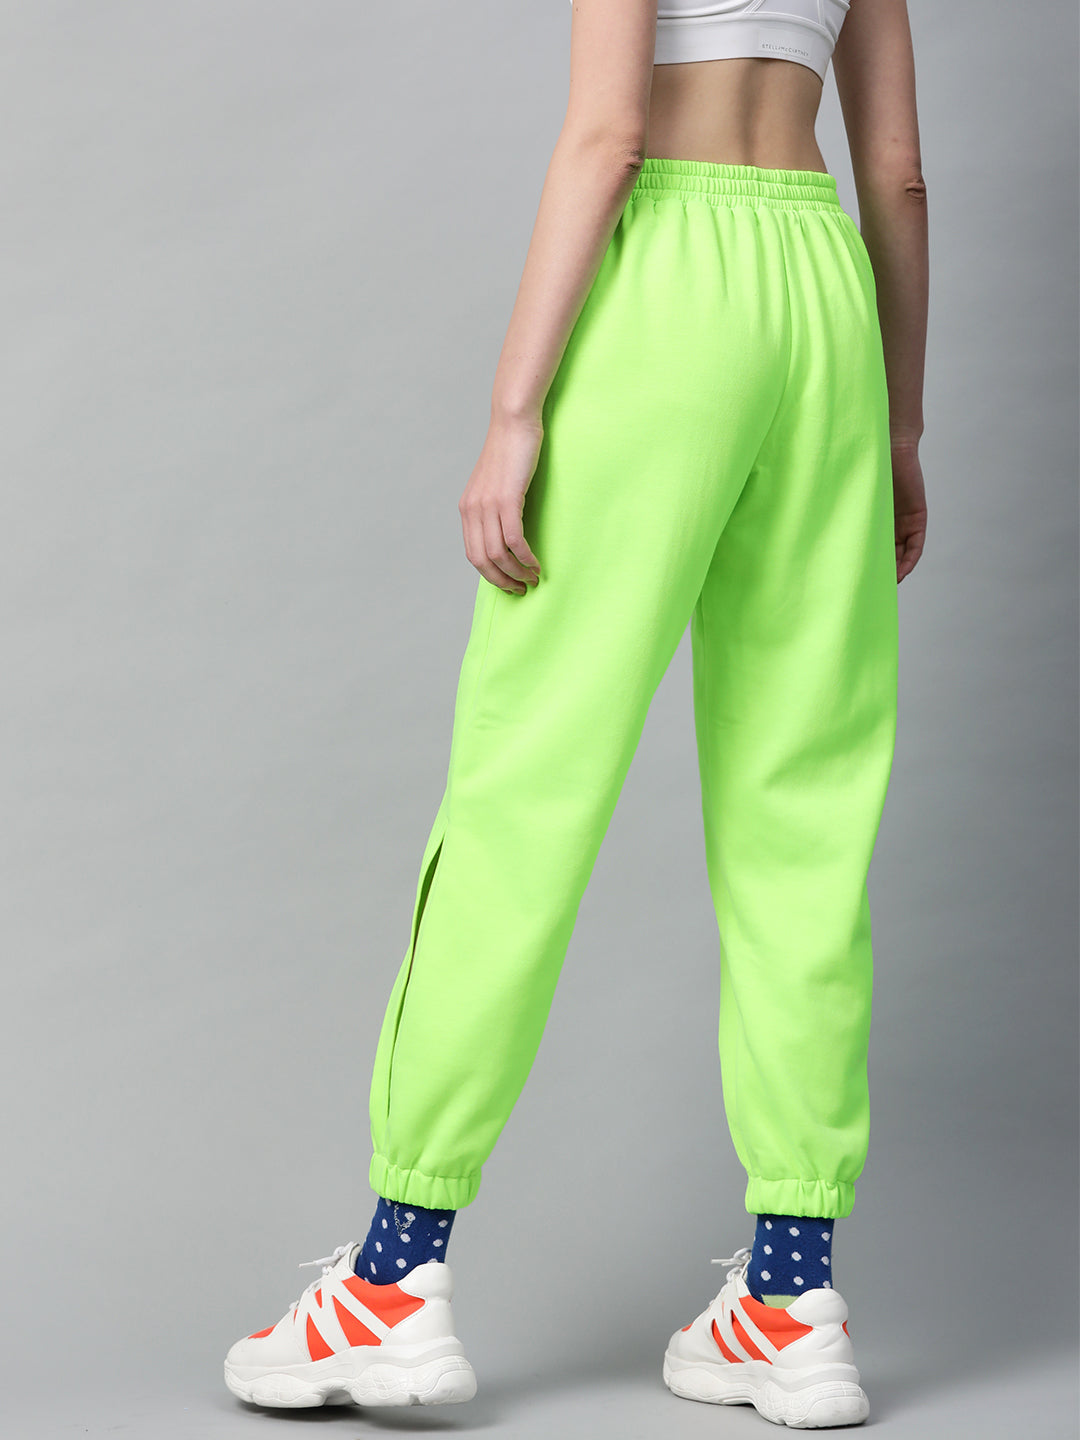 Premium Stylish Regular Slim Fit Athletic Fearless Printed Neon Green Track  Pants  Yoga Sports Gym